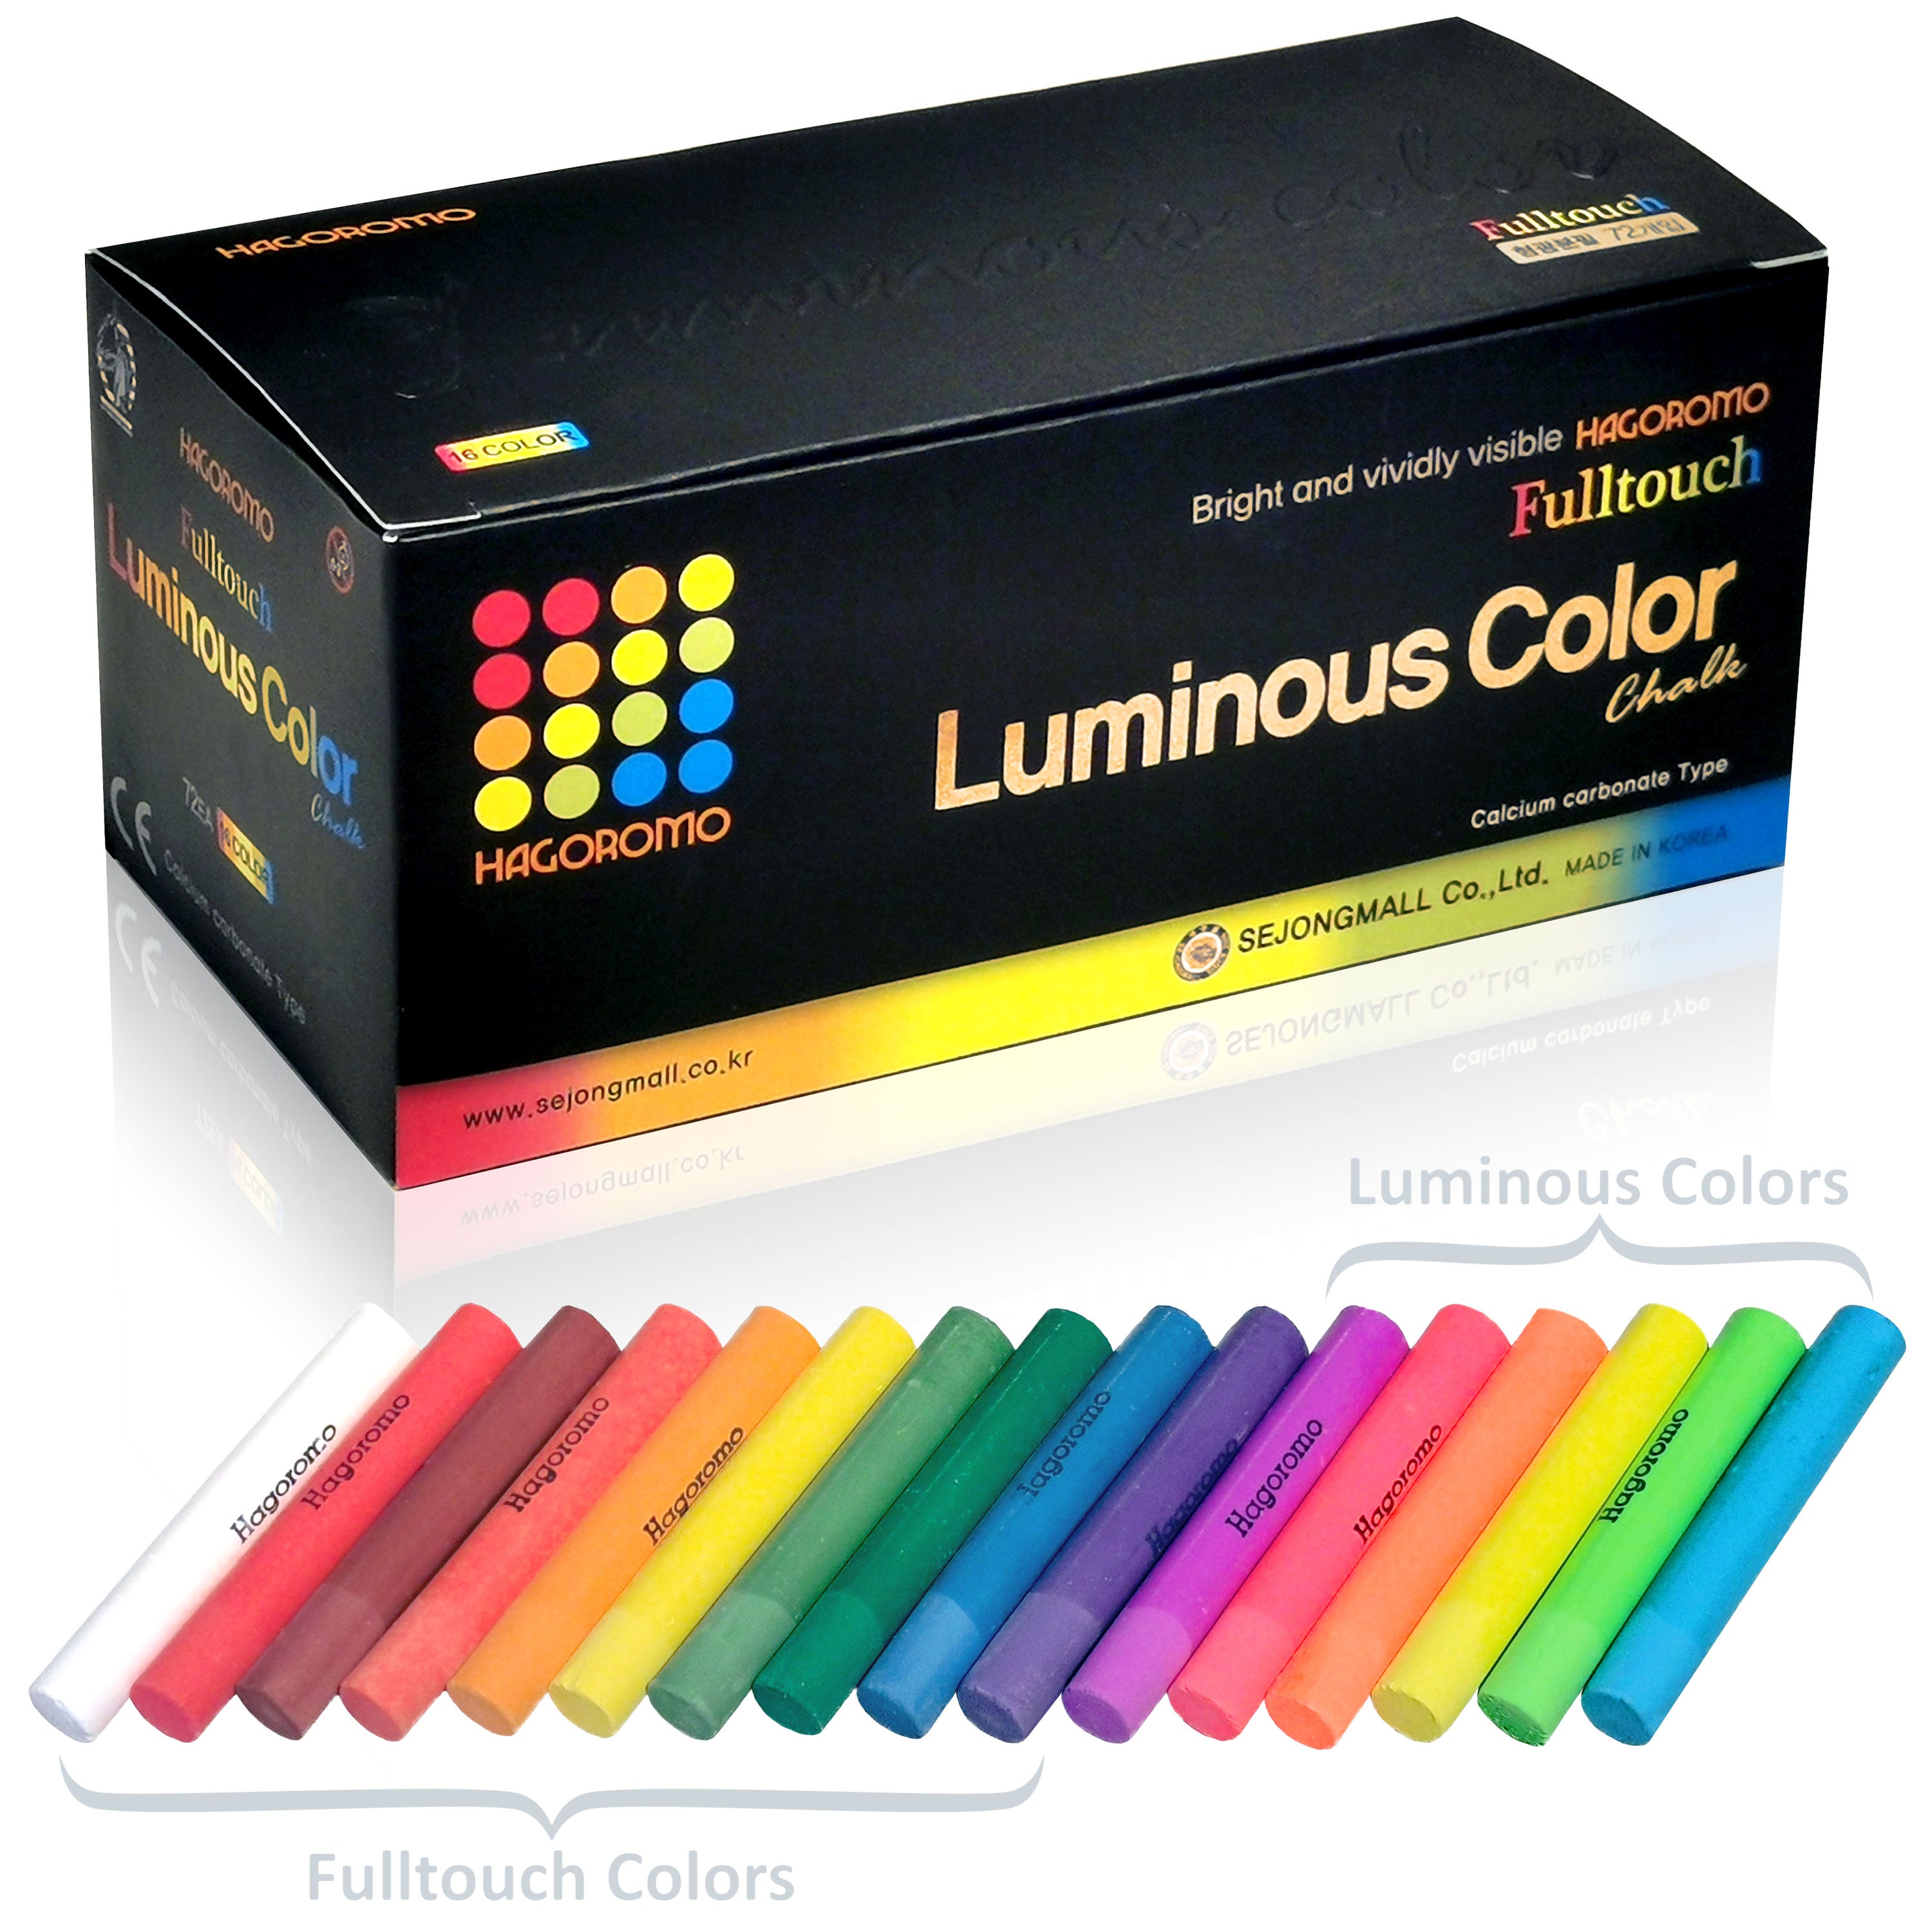 HAGOROMO Fulltouch x Luminous Chalk 10+6 Colors 72 PCS [Limited Editio –